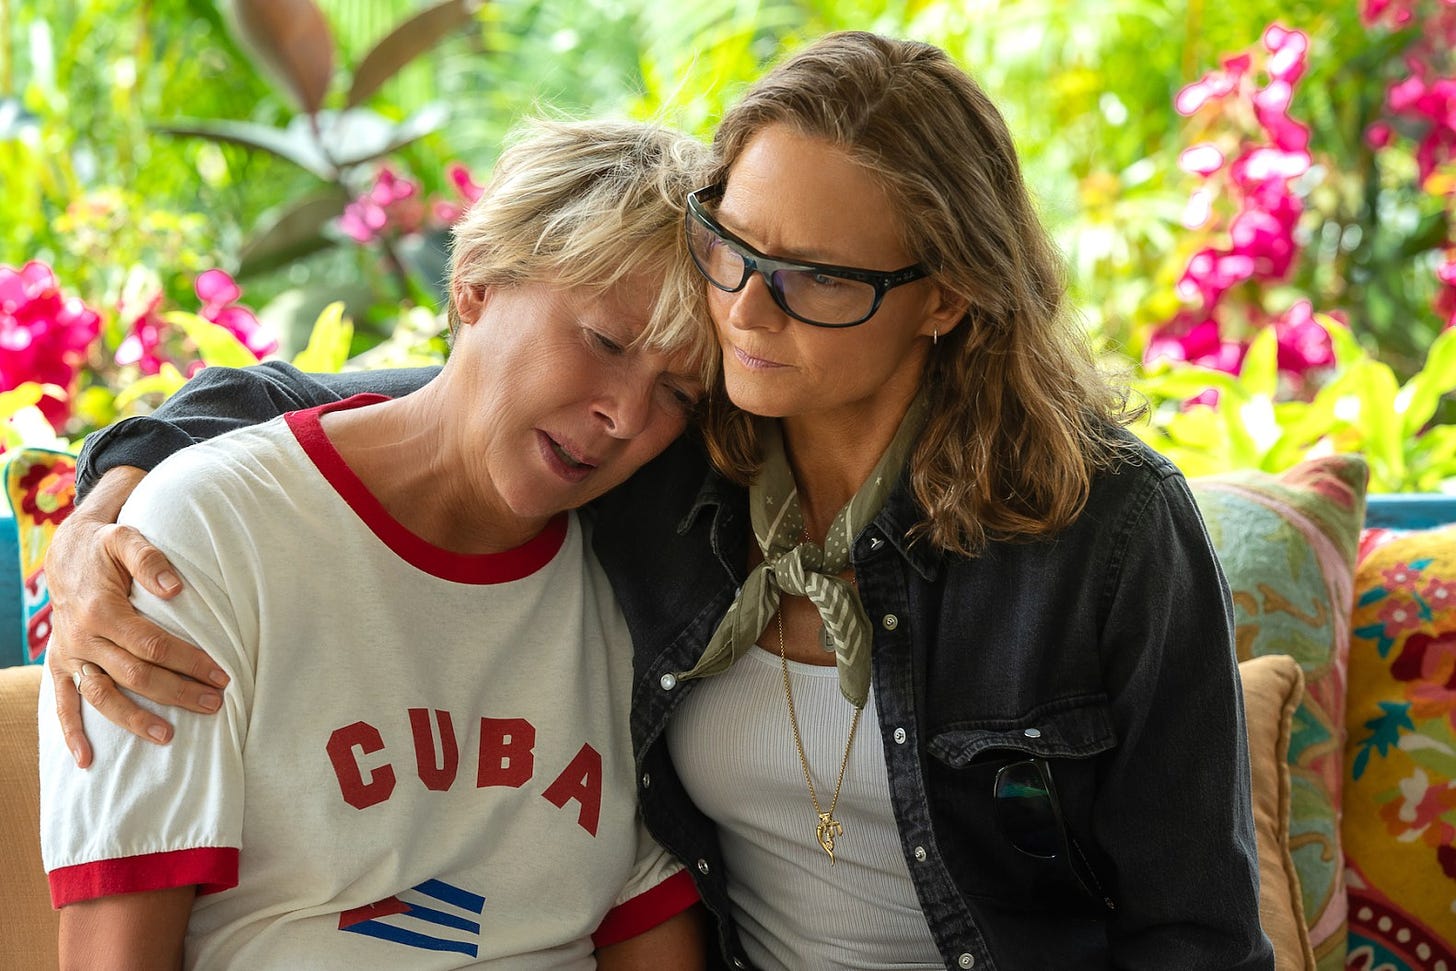 Nyad' Review: Annette Bening, Jodie Foster Star in Netflix Oscar Bait